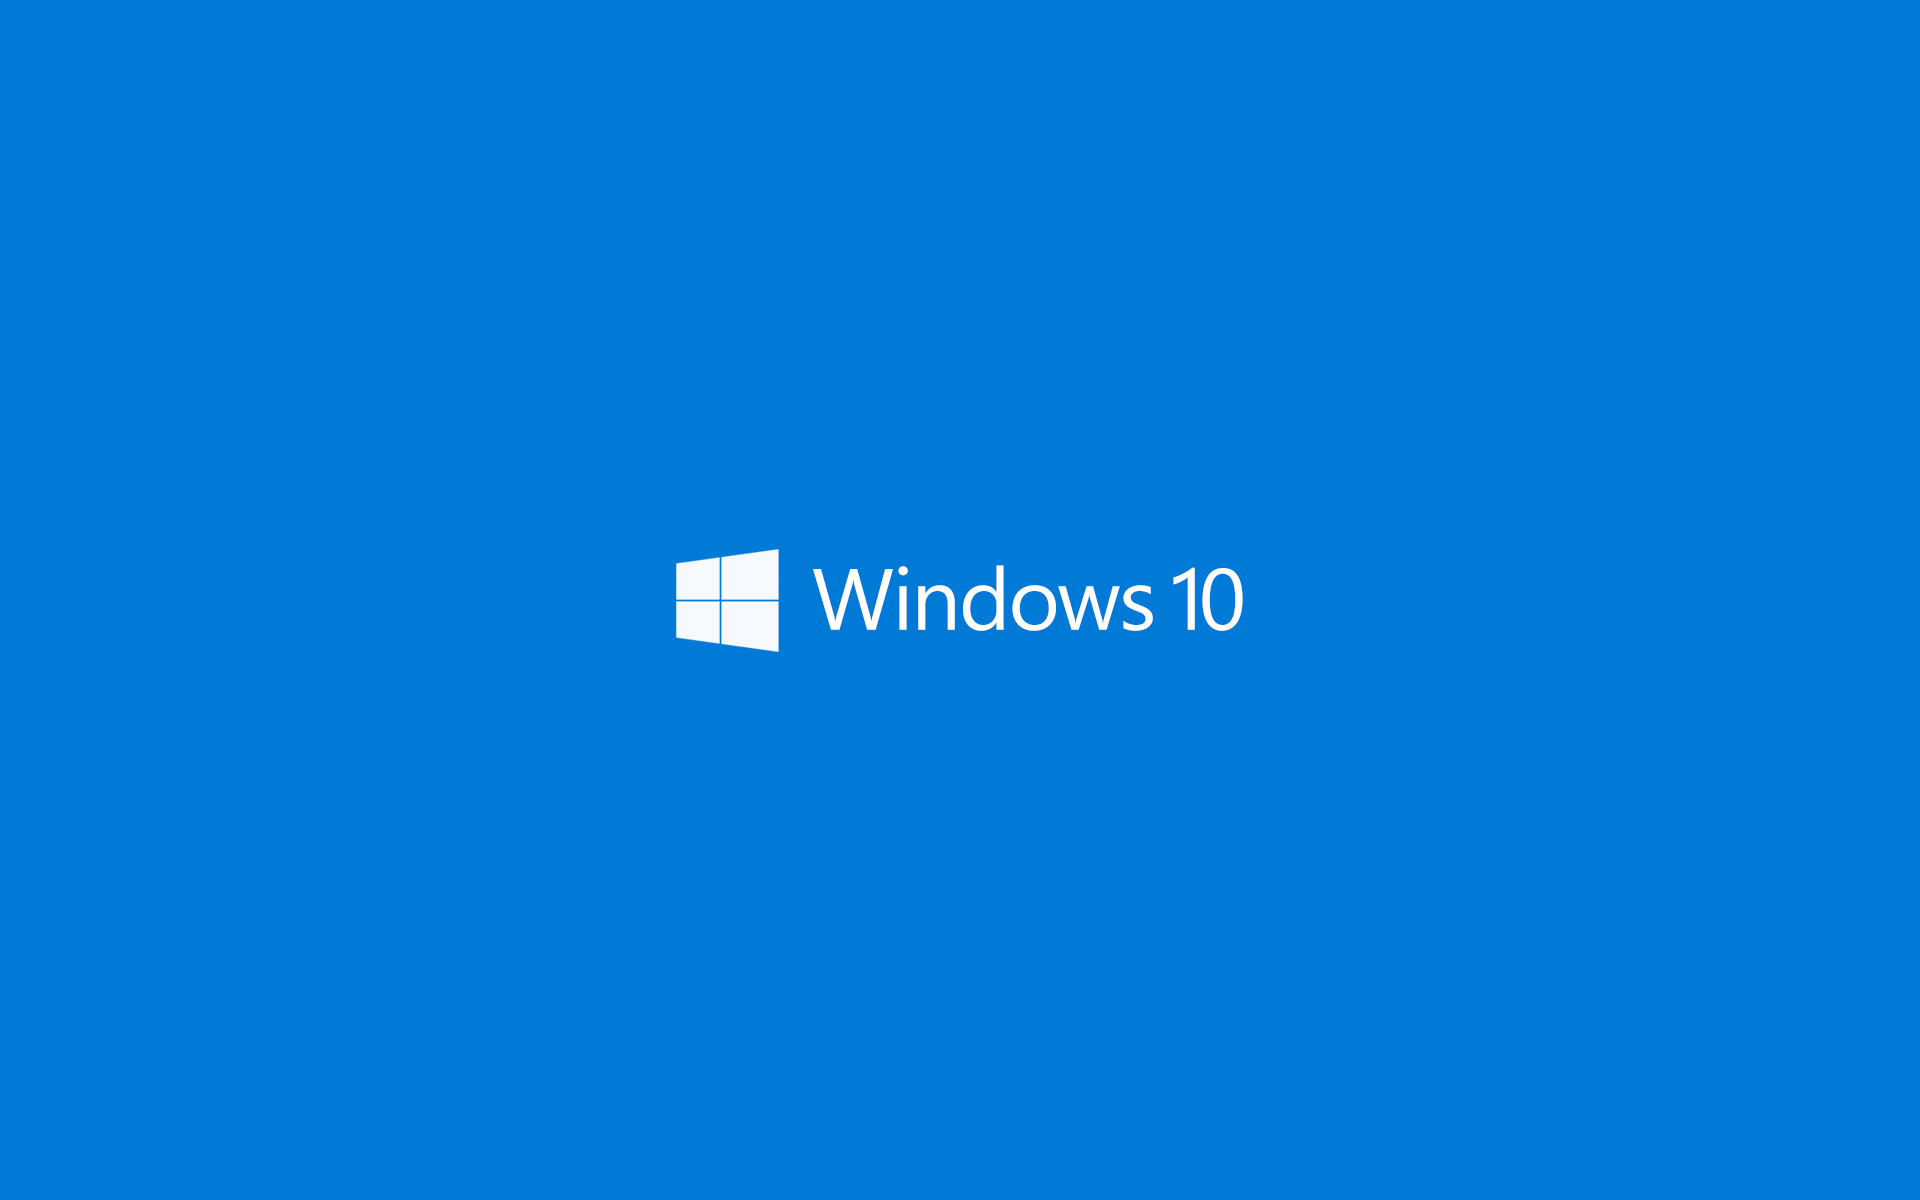 Windows 10 Original 4 Hd Computer 4k Wallpapers Images Backgrounds